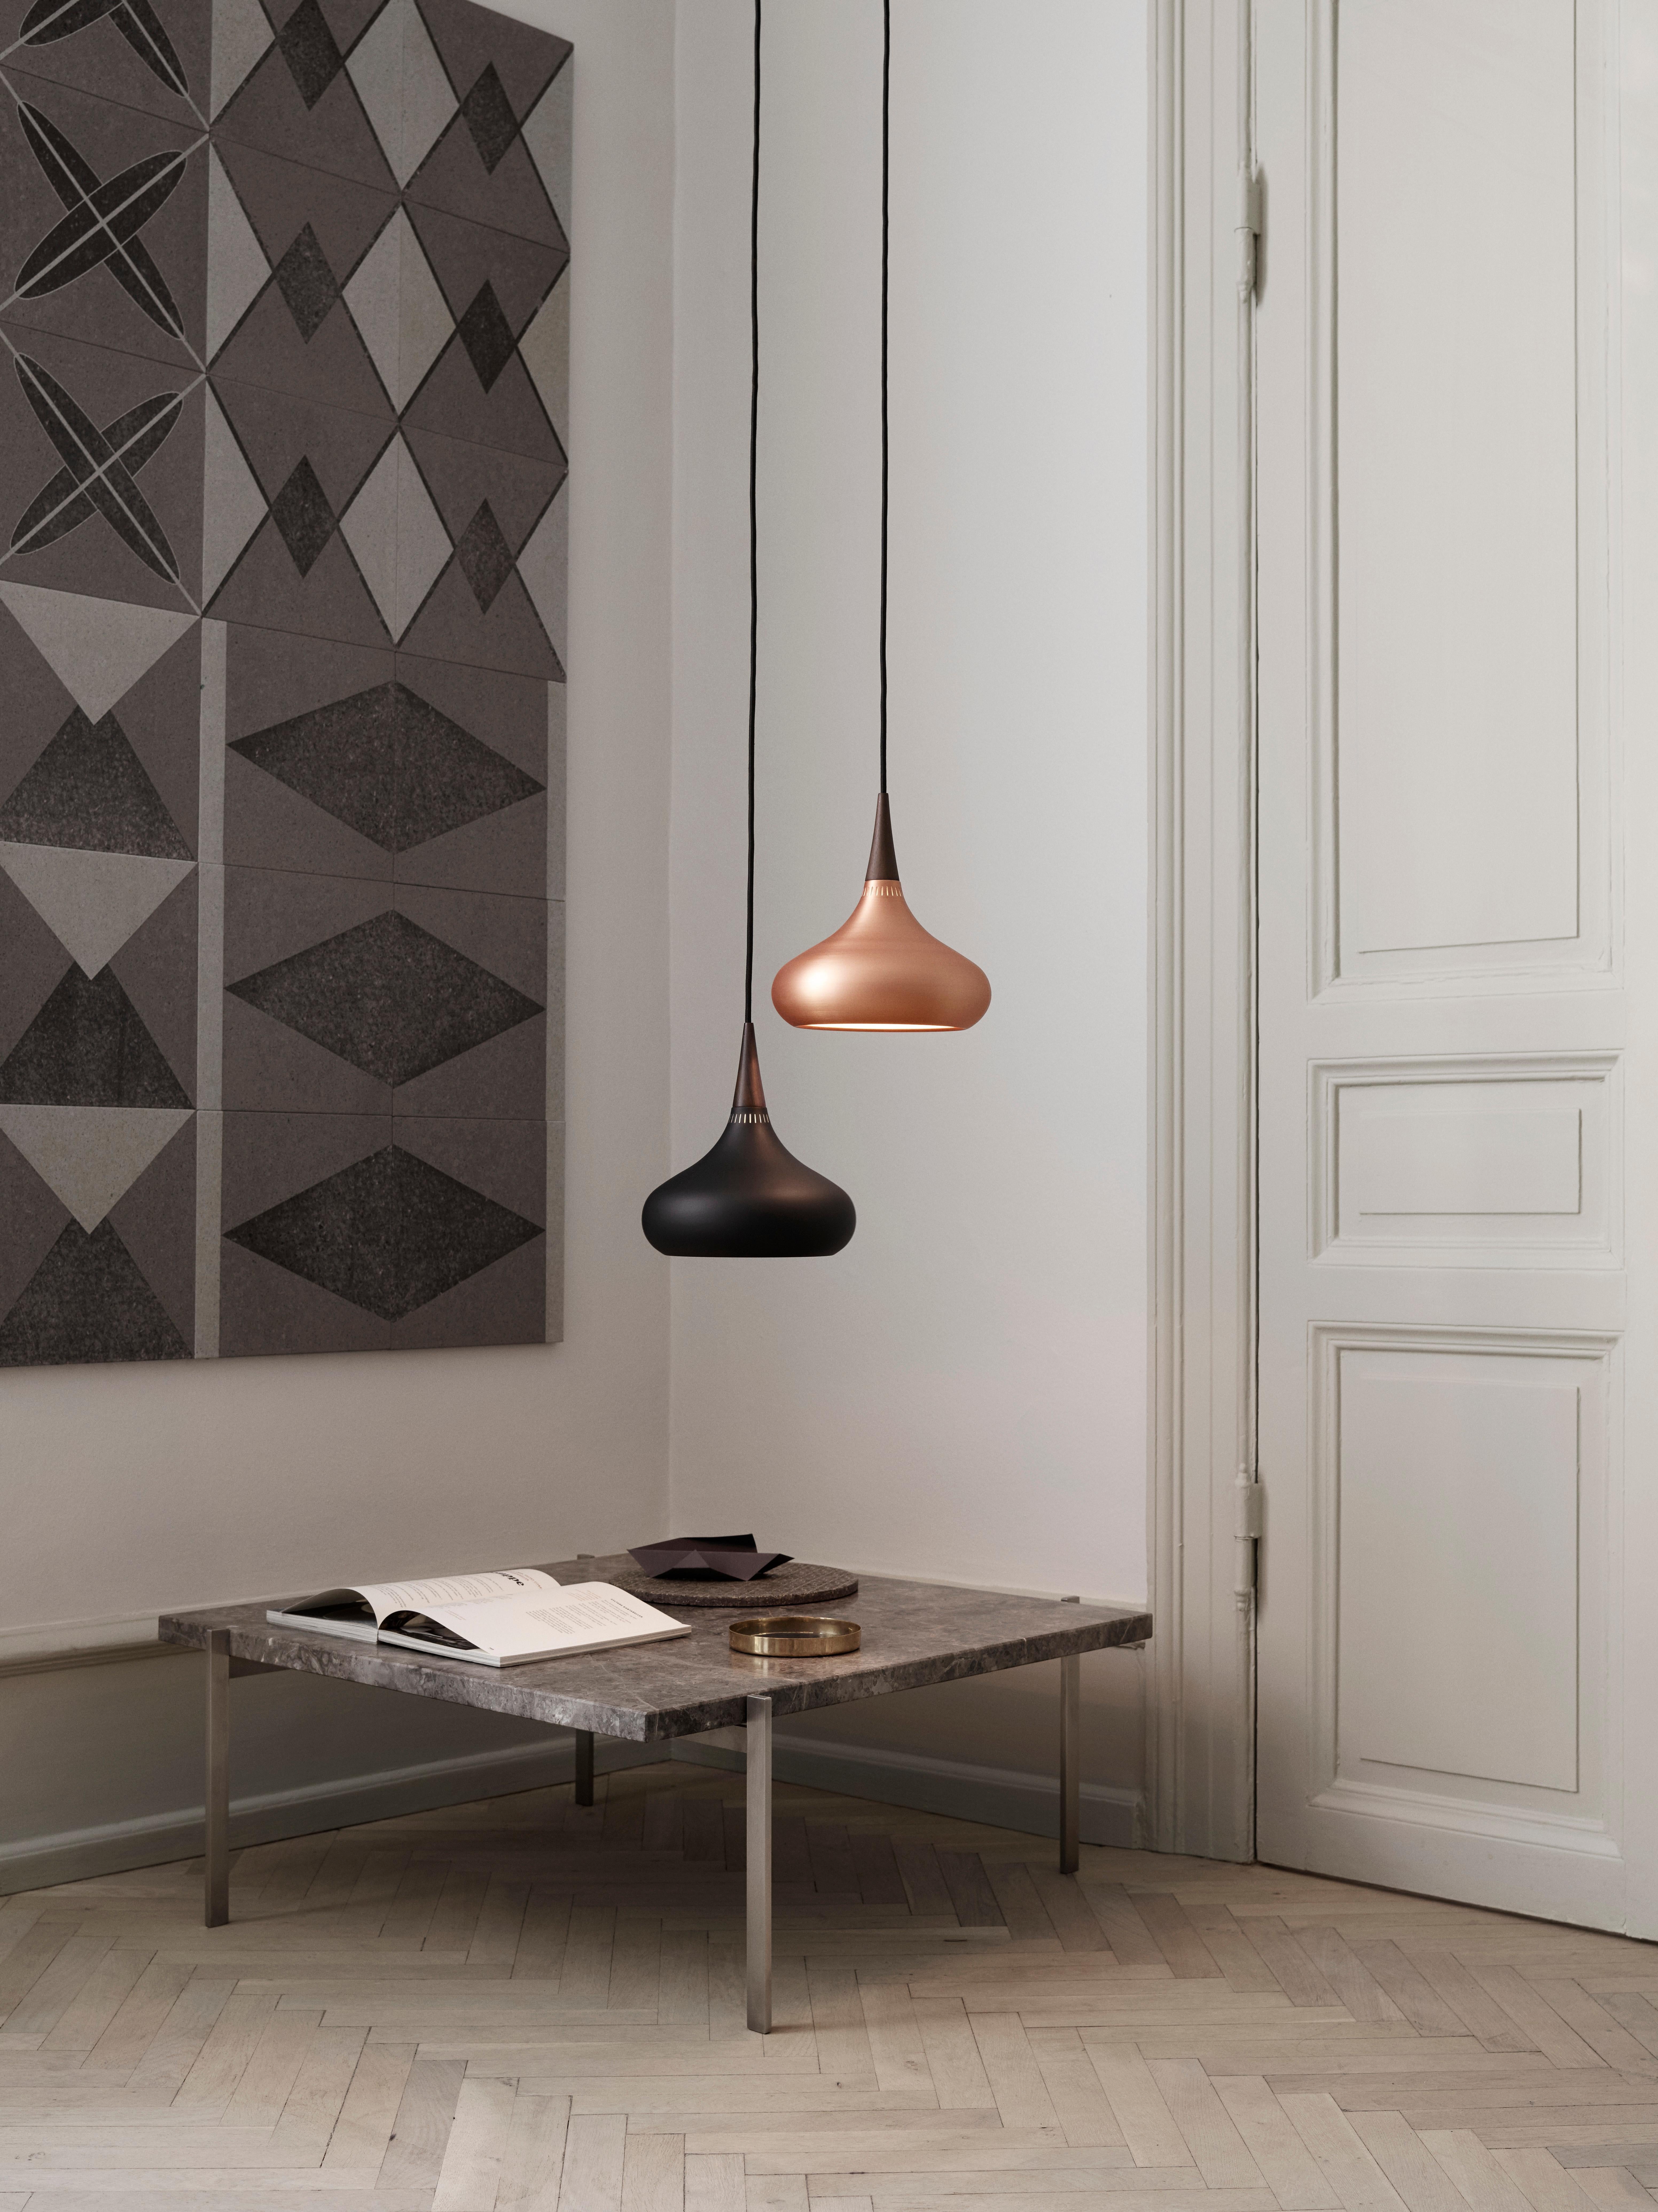 Small Jo Hammerborg 'Orient' Pendant Lamp for Fritz Hansen in Aluminum and Oak For Sale 6